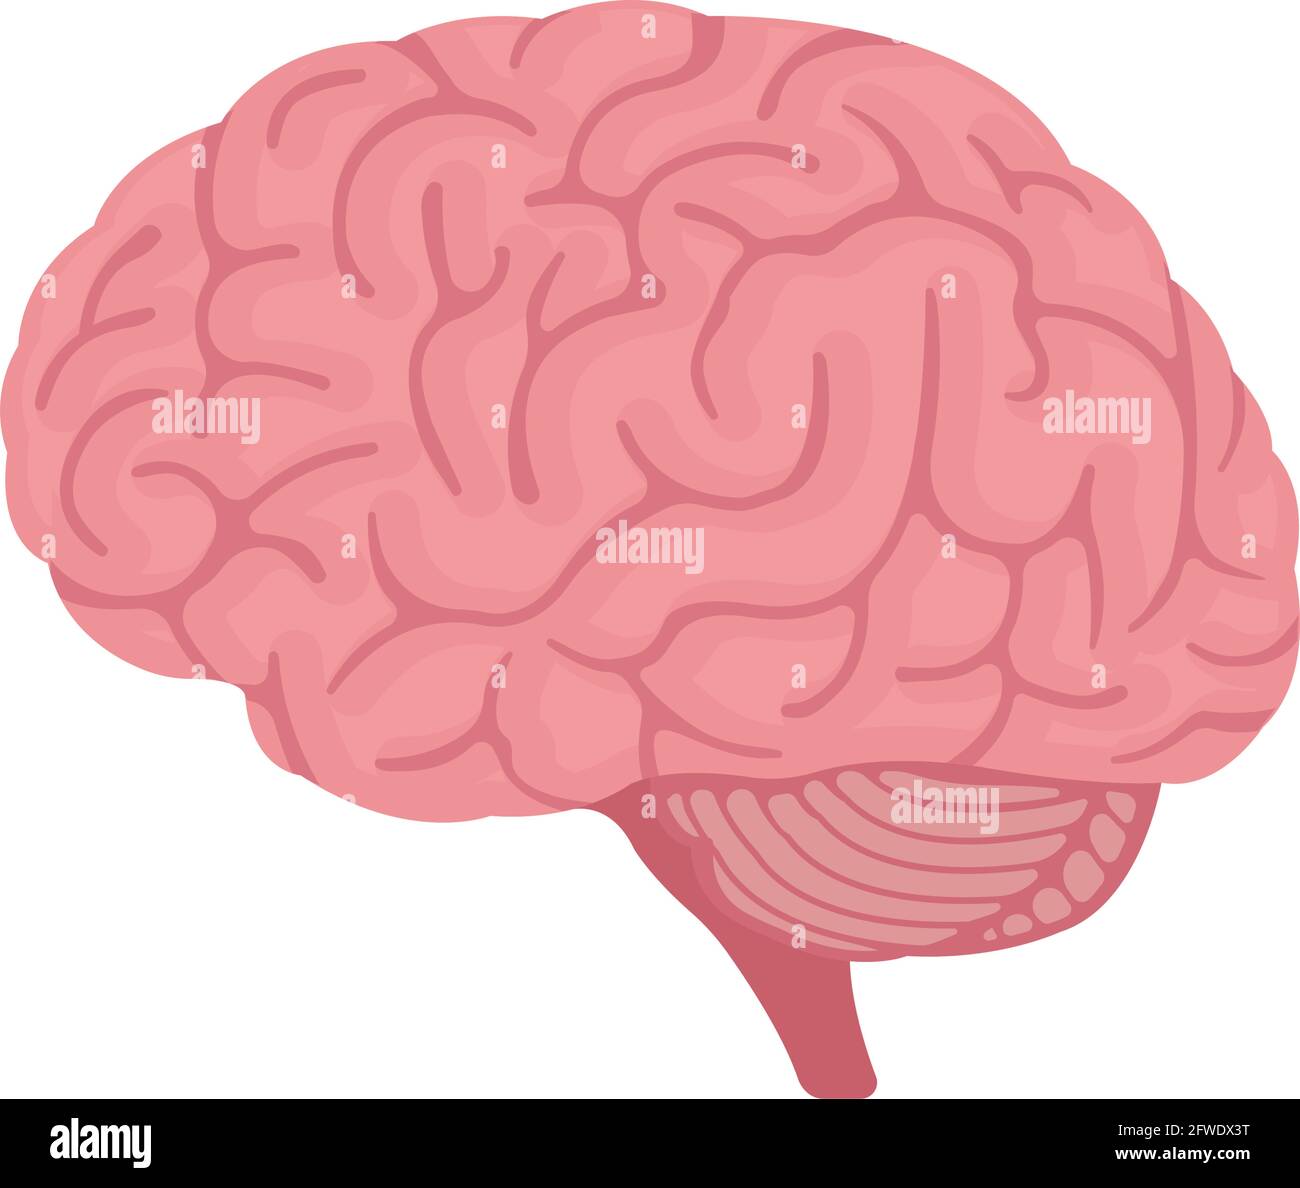 Vektor-Illustration des menschlichen Gehirns Stock Vektor